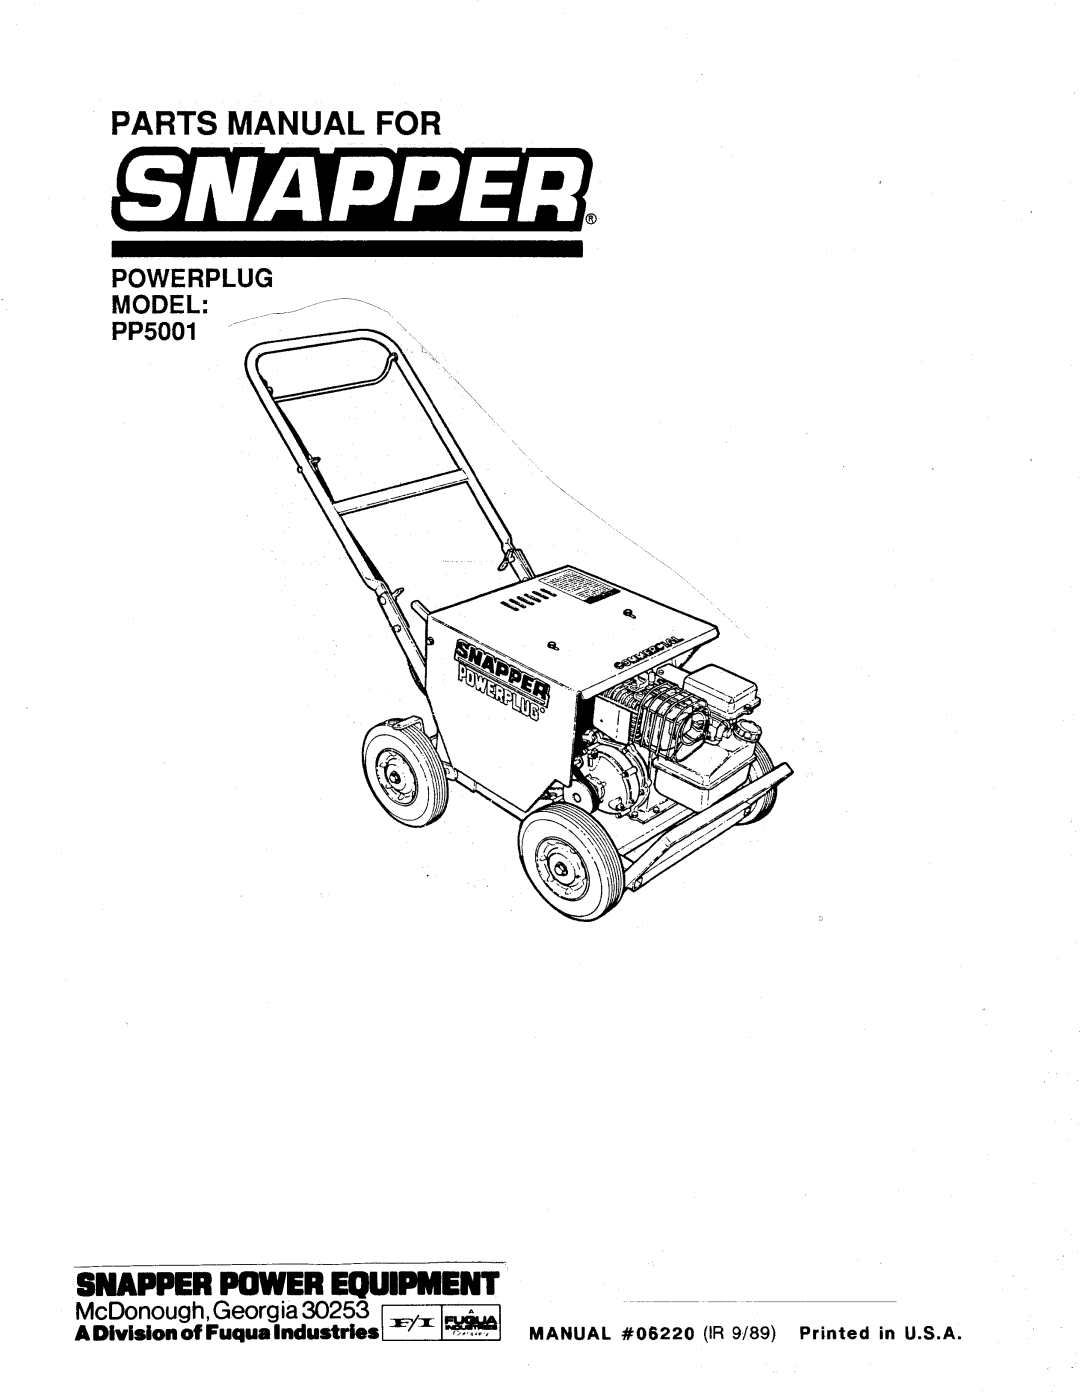 Snapper PP5001 manual 